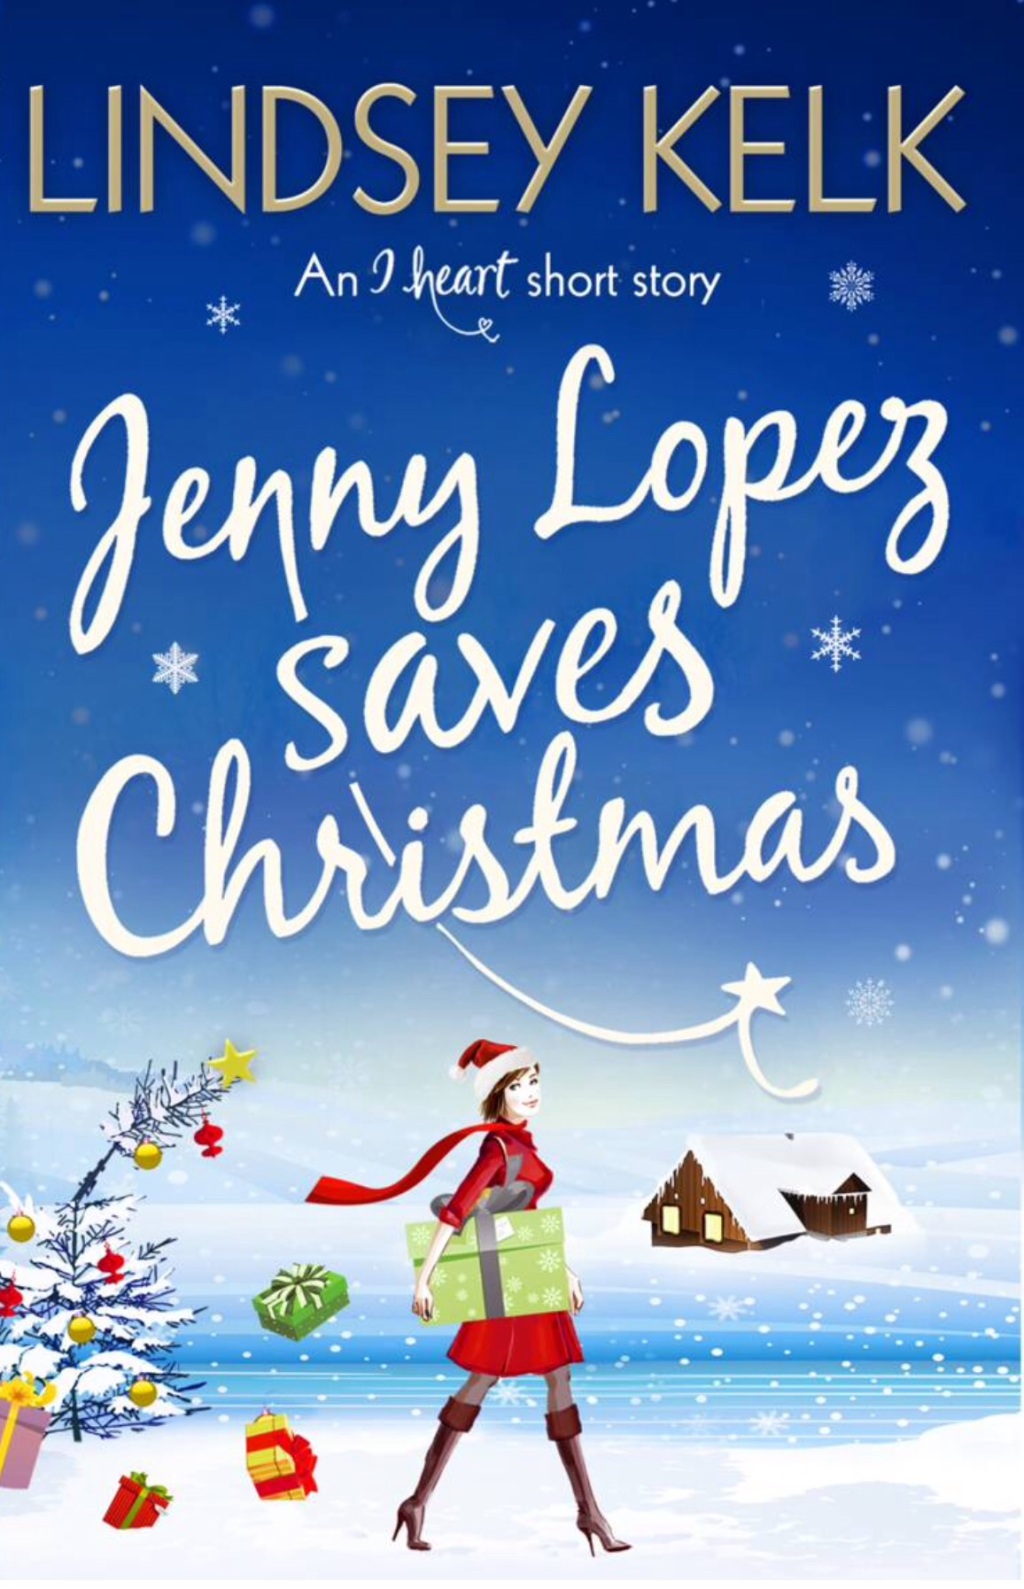 “Jenny Lopez saves Christmas” by Lindsey Kelk Book Review